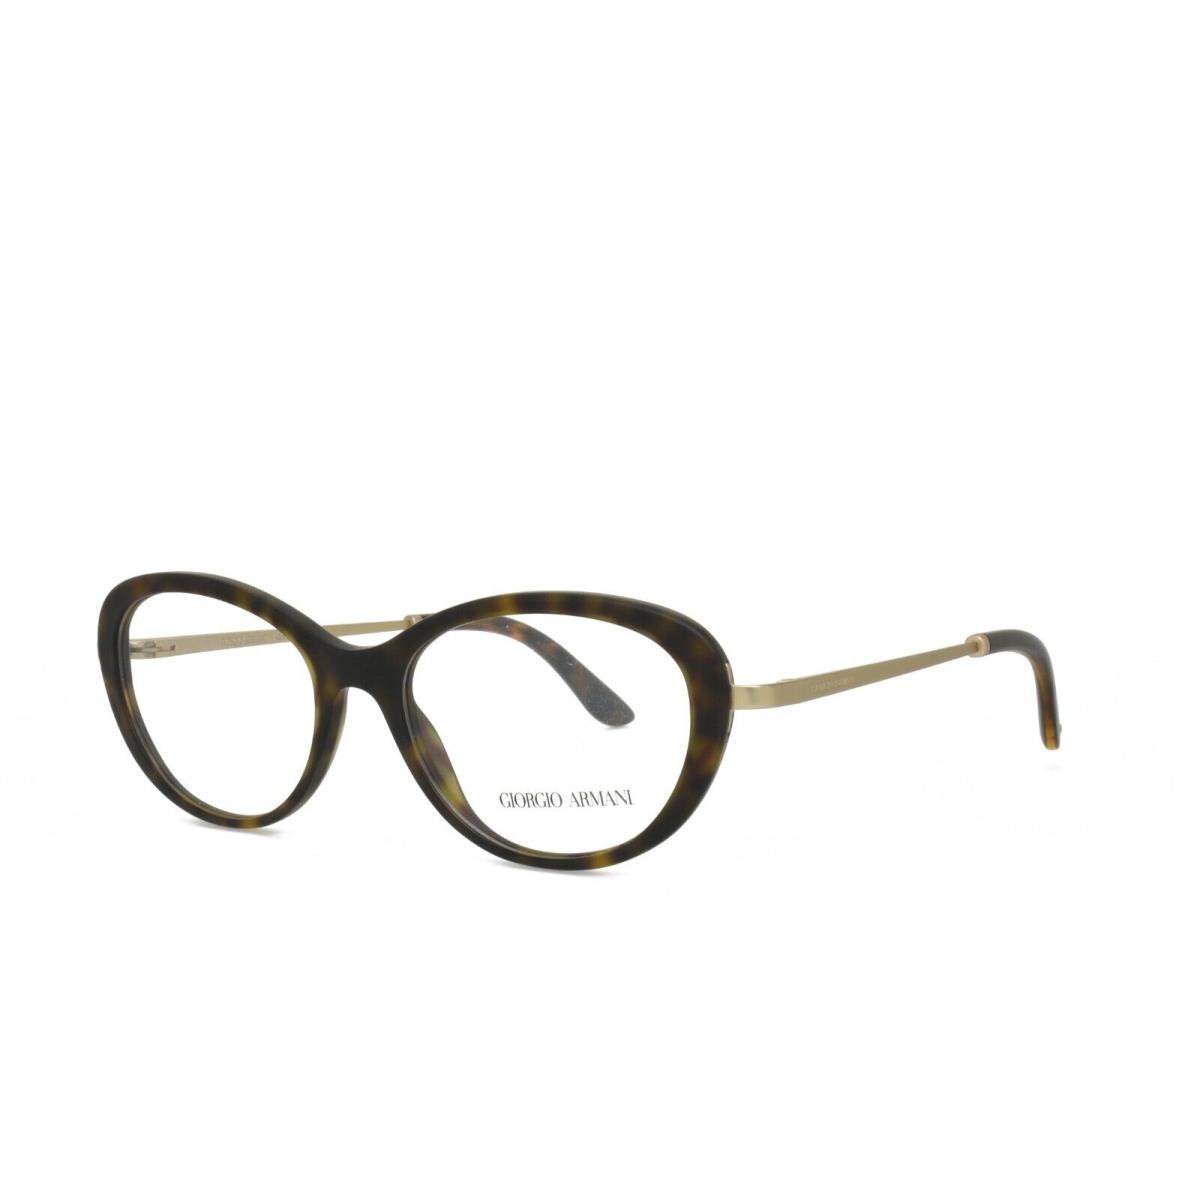 Giorgio Armani 7046 5089 52-16-140 Matte Tortoise Eyeglasses Frames